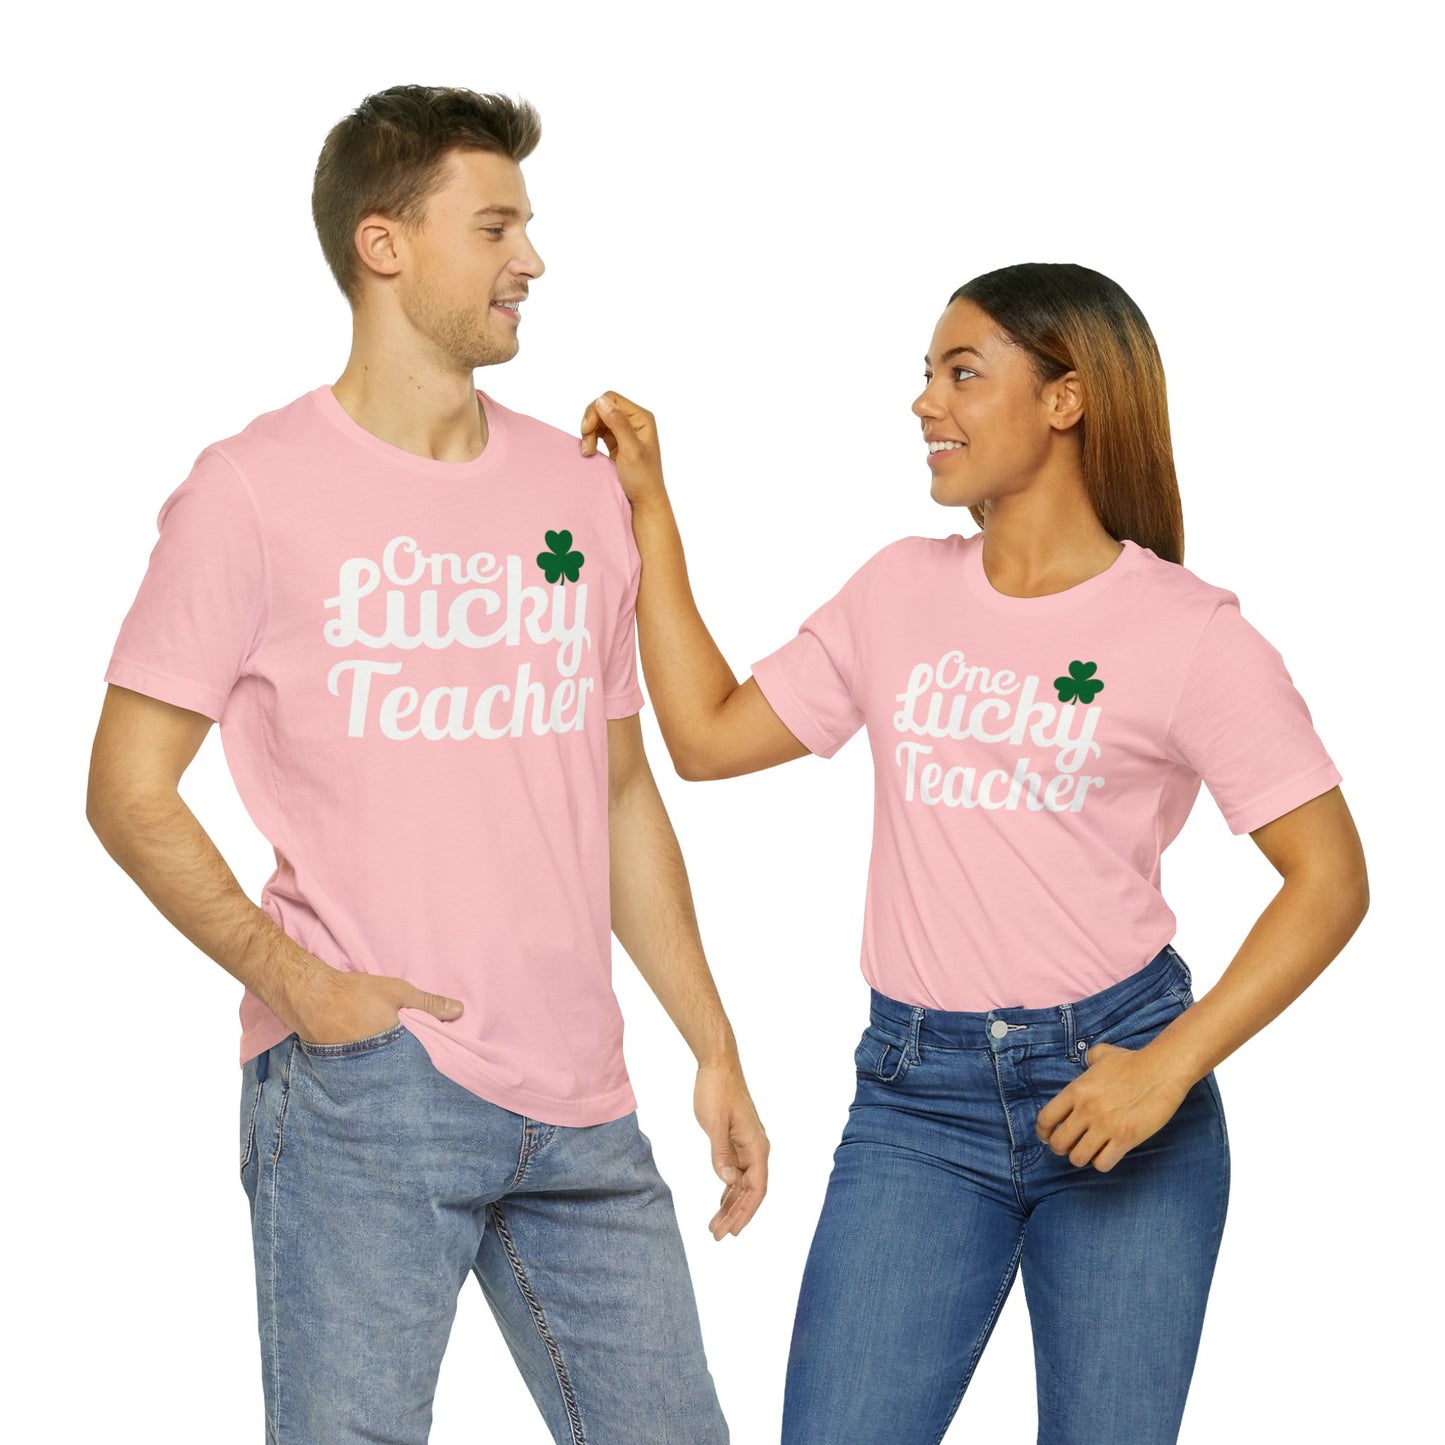 One Lucky Teacher Shirt Feeling Lucky St Patrick's Day Shirt St Paddy's Day